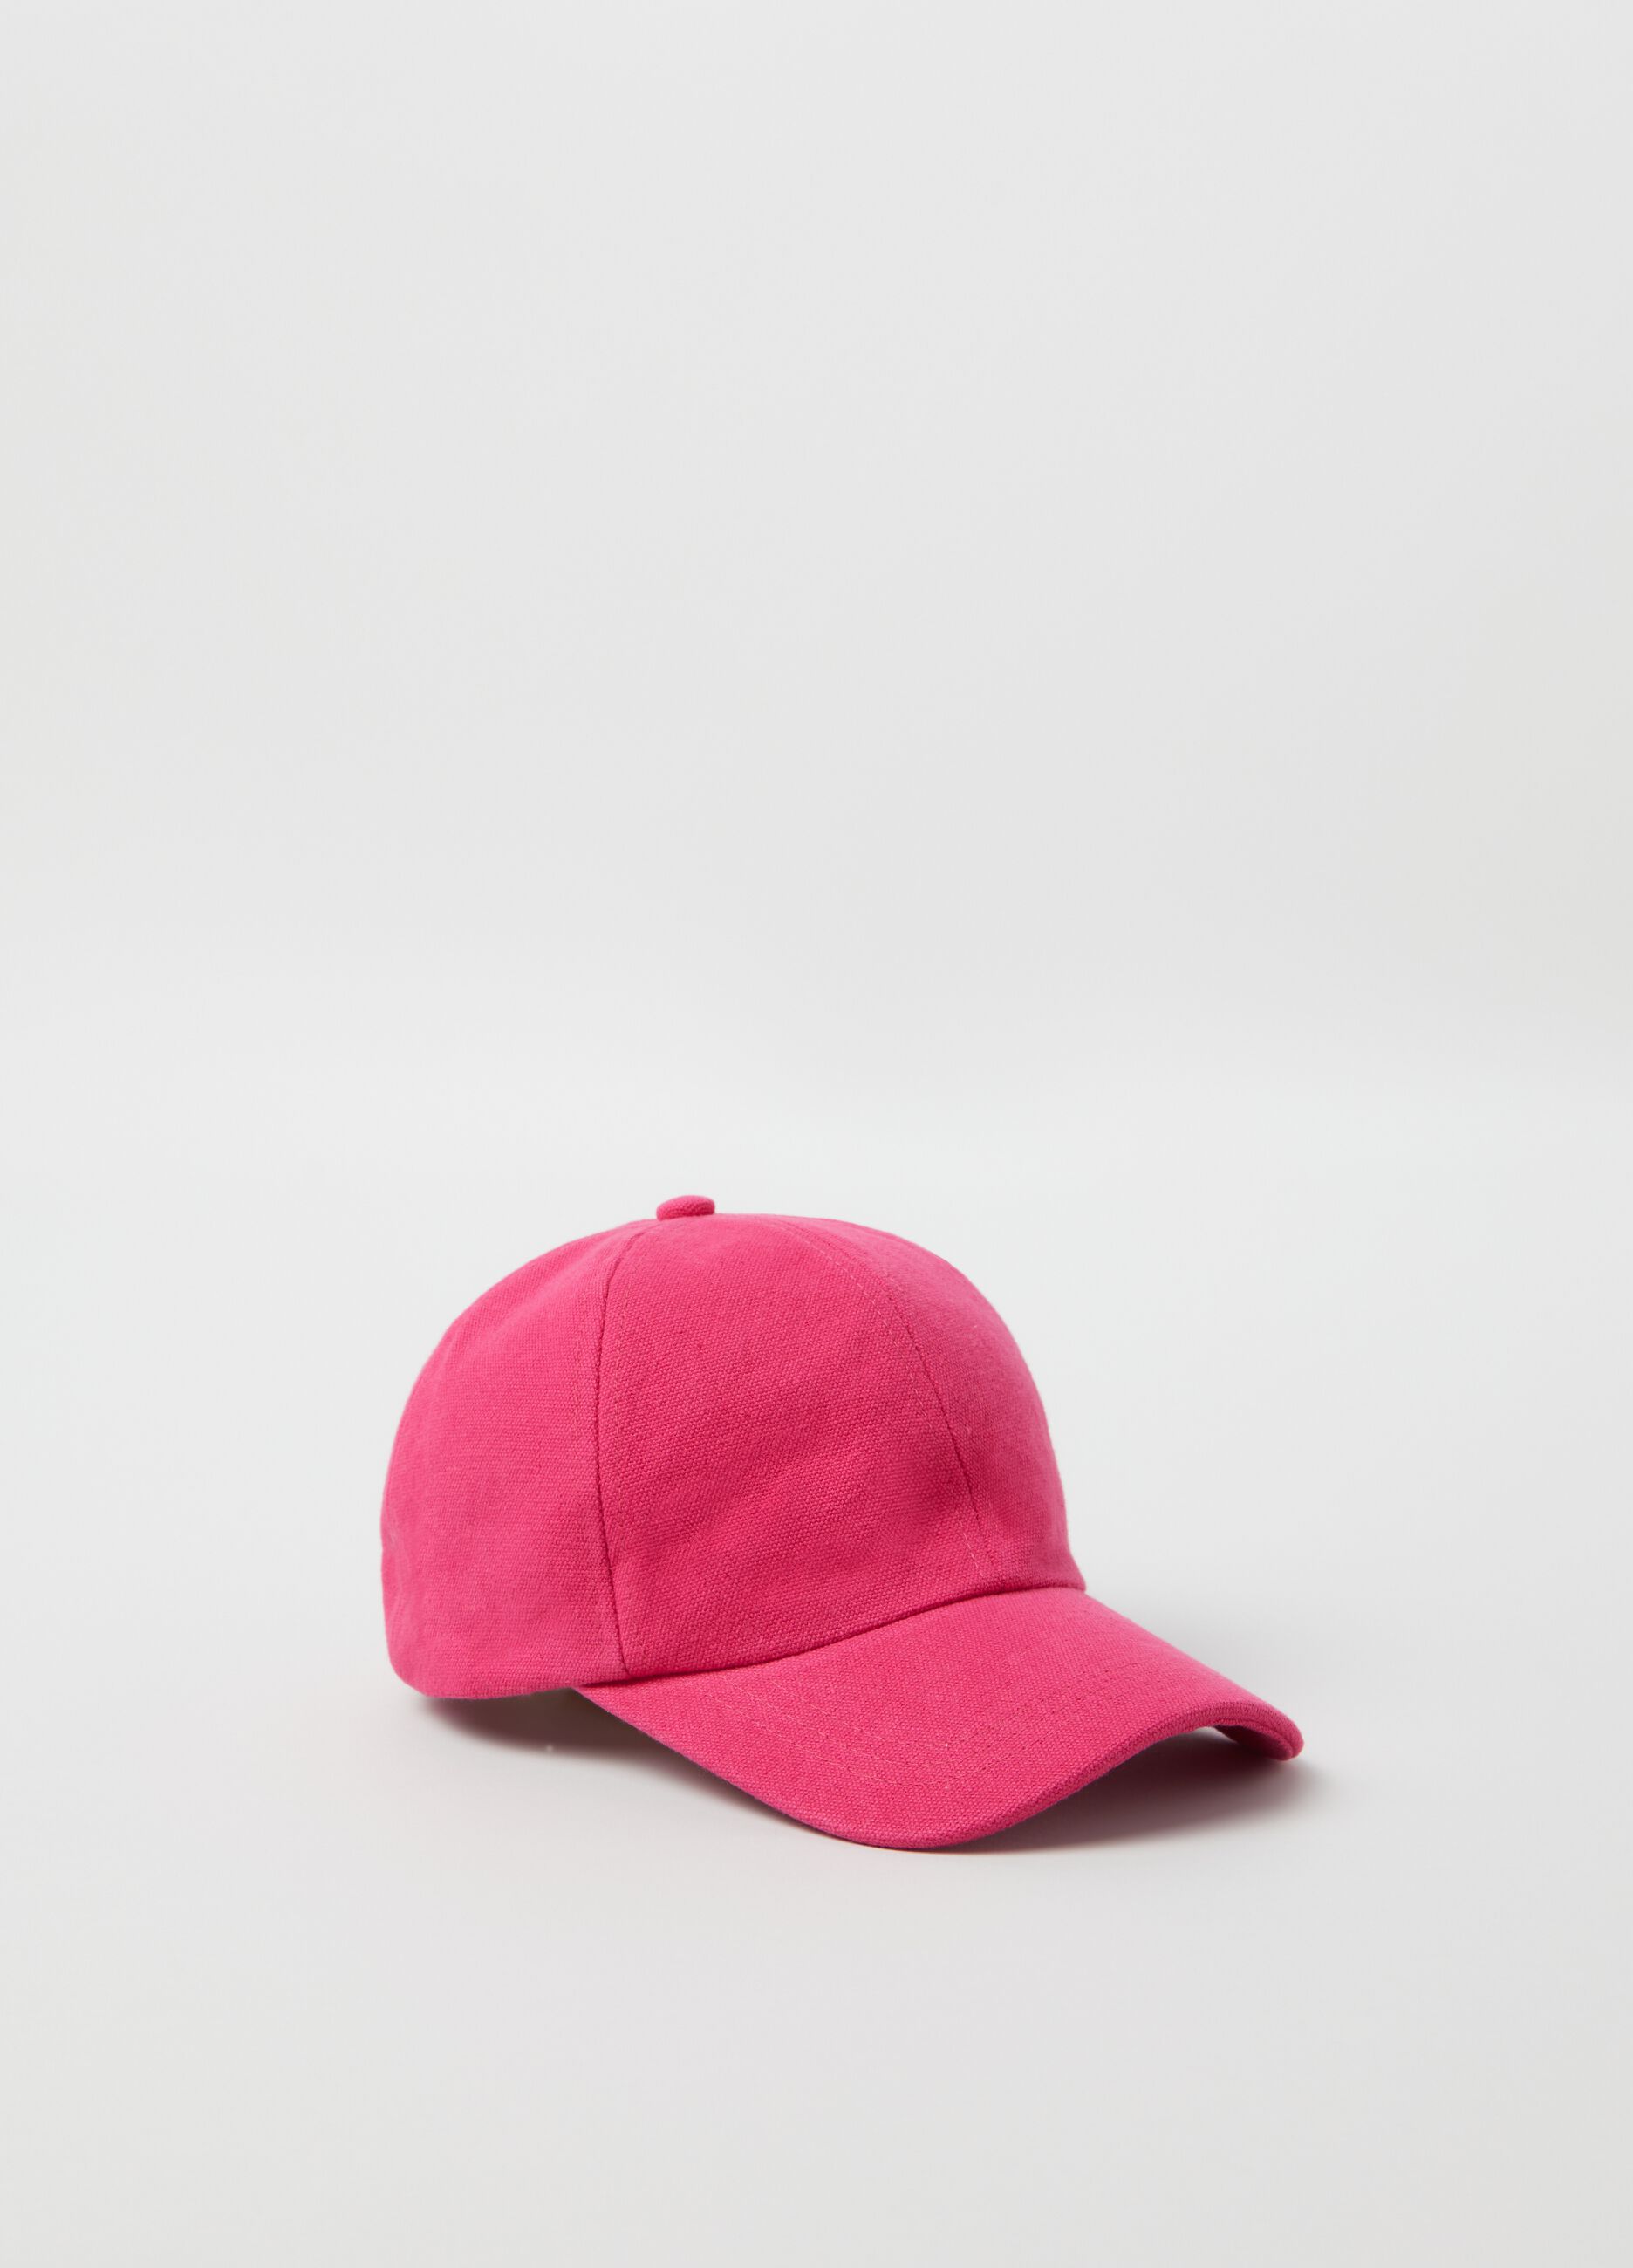 Solid colour baseball cap